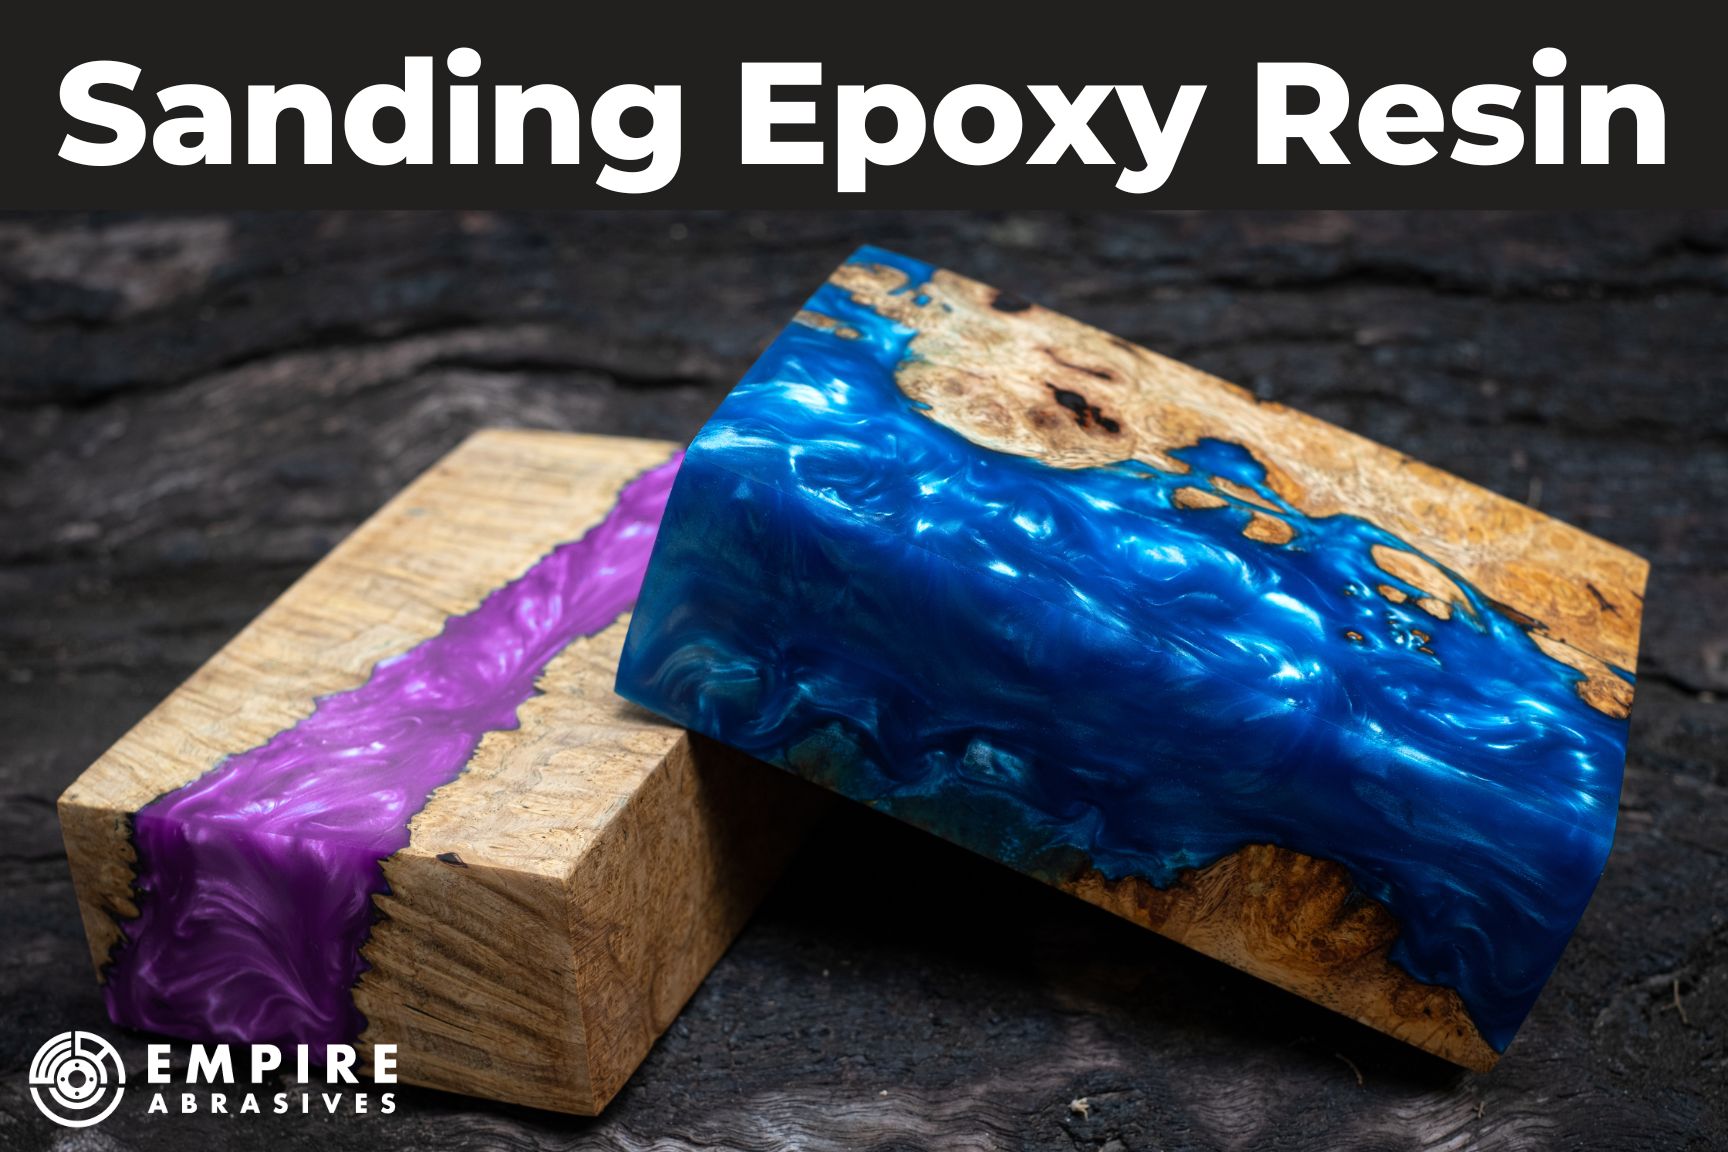 Resin Sanding and Polishing Kit, Epoxy Resin Supplies with 5 Resin